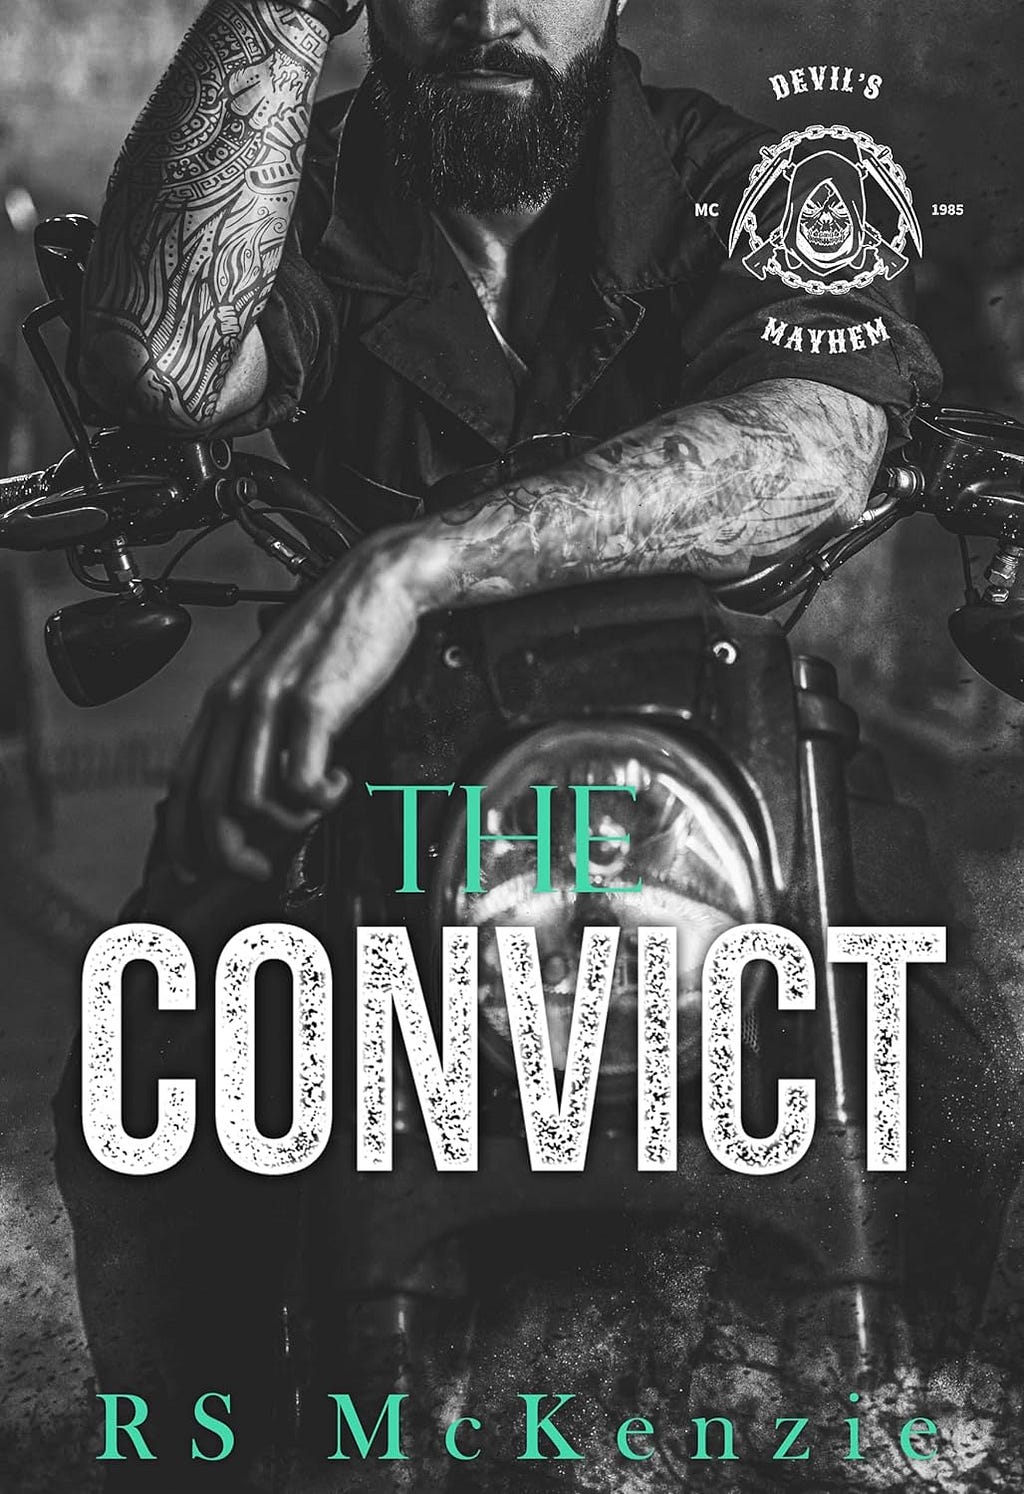 [PDF] The Convict (Devil's Mayhem MC #1) By R.S. McKenzie